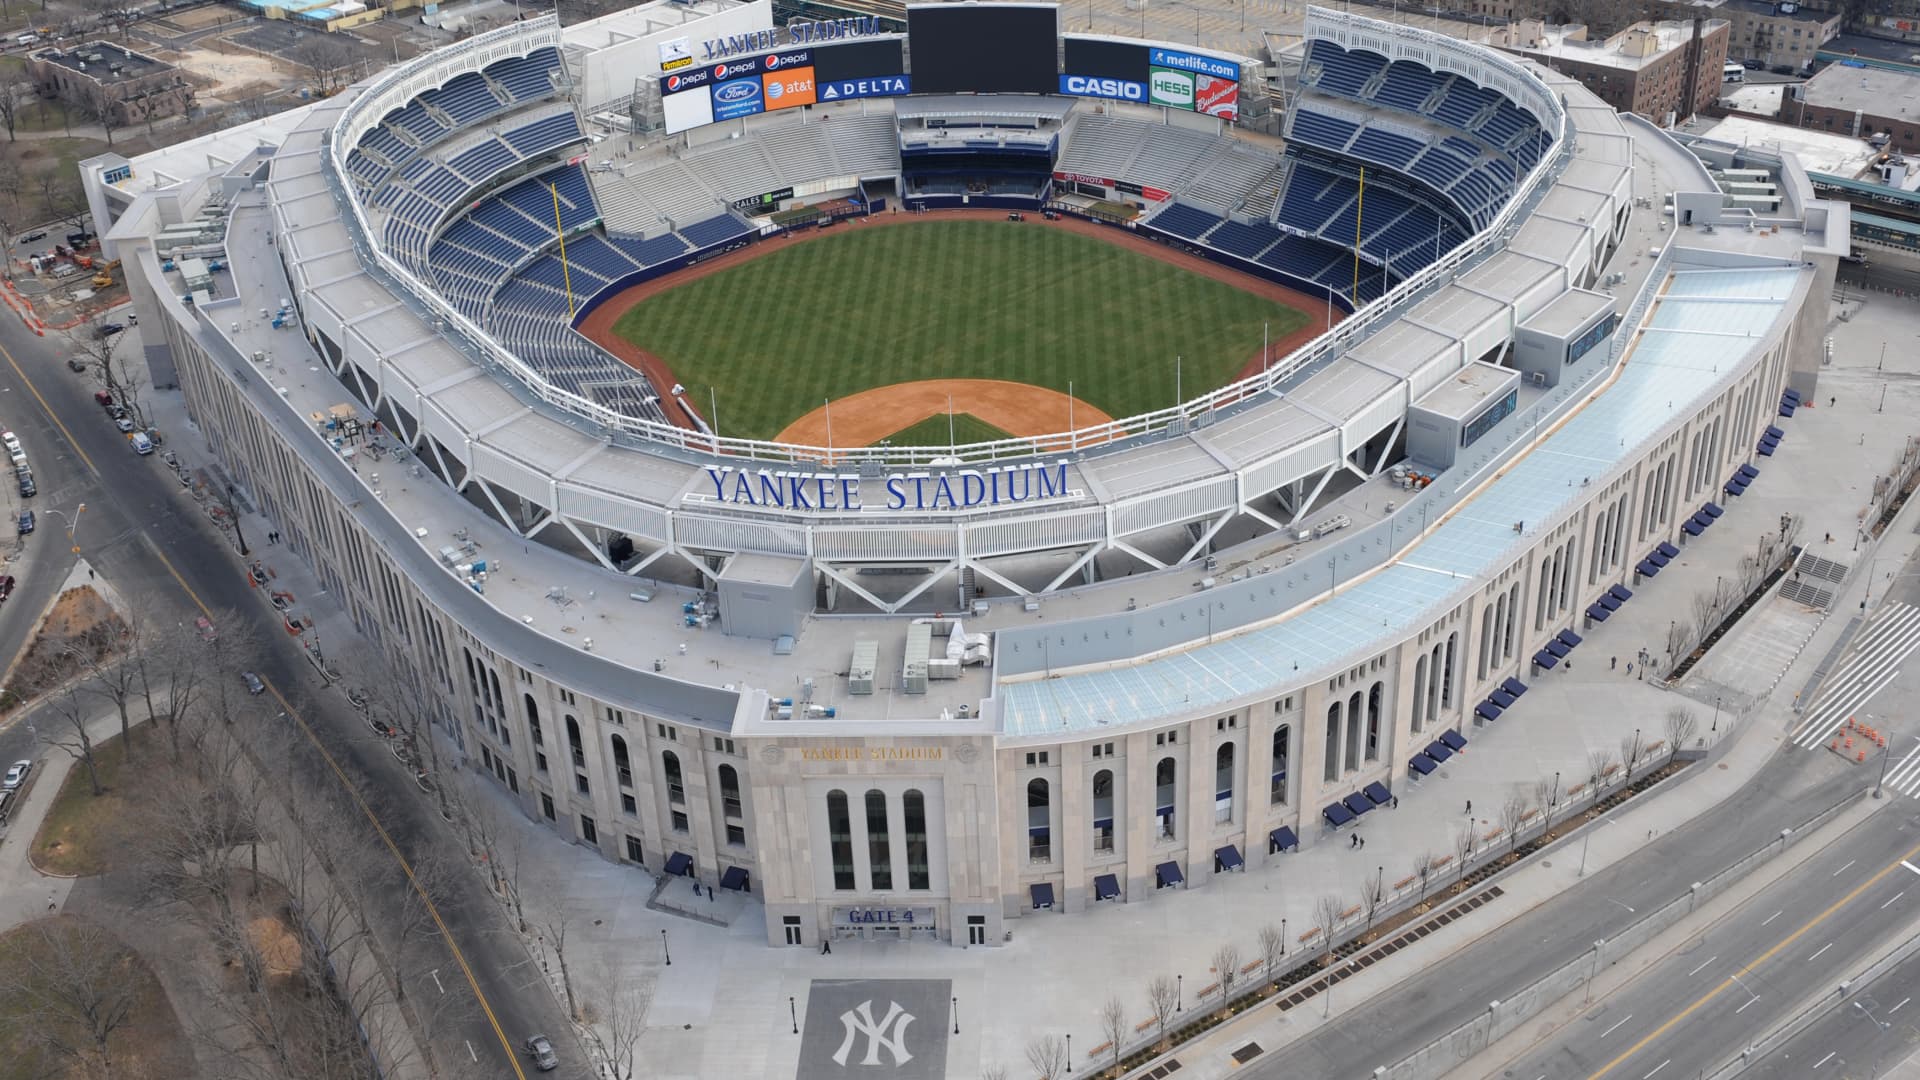 Yankee Stadium cost $2.3 billion to build.